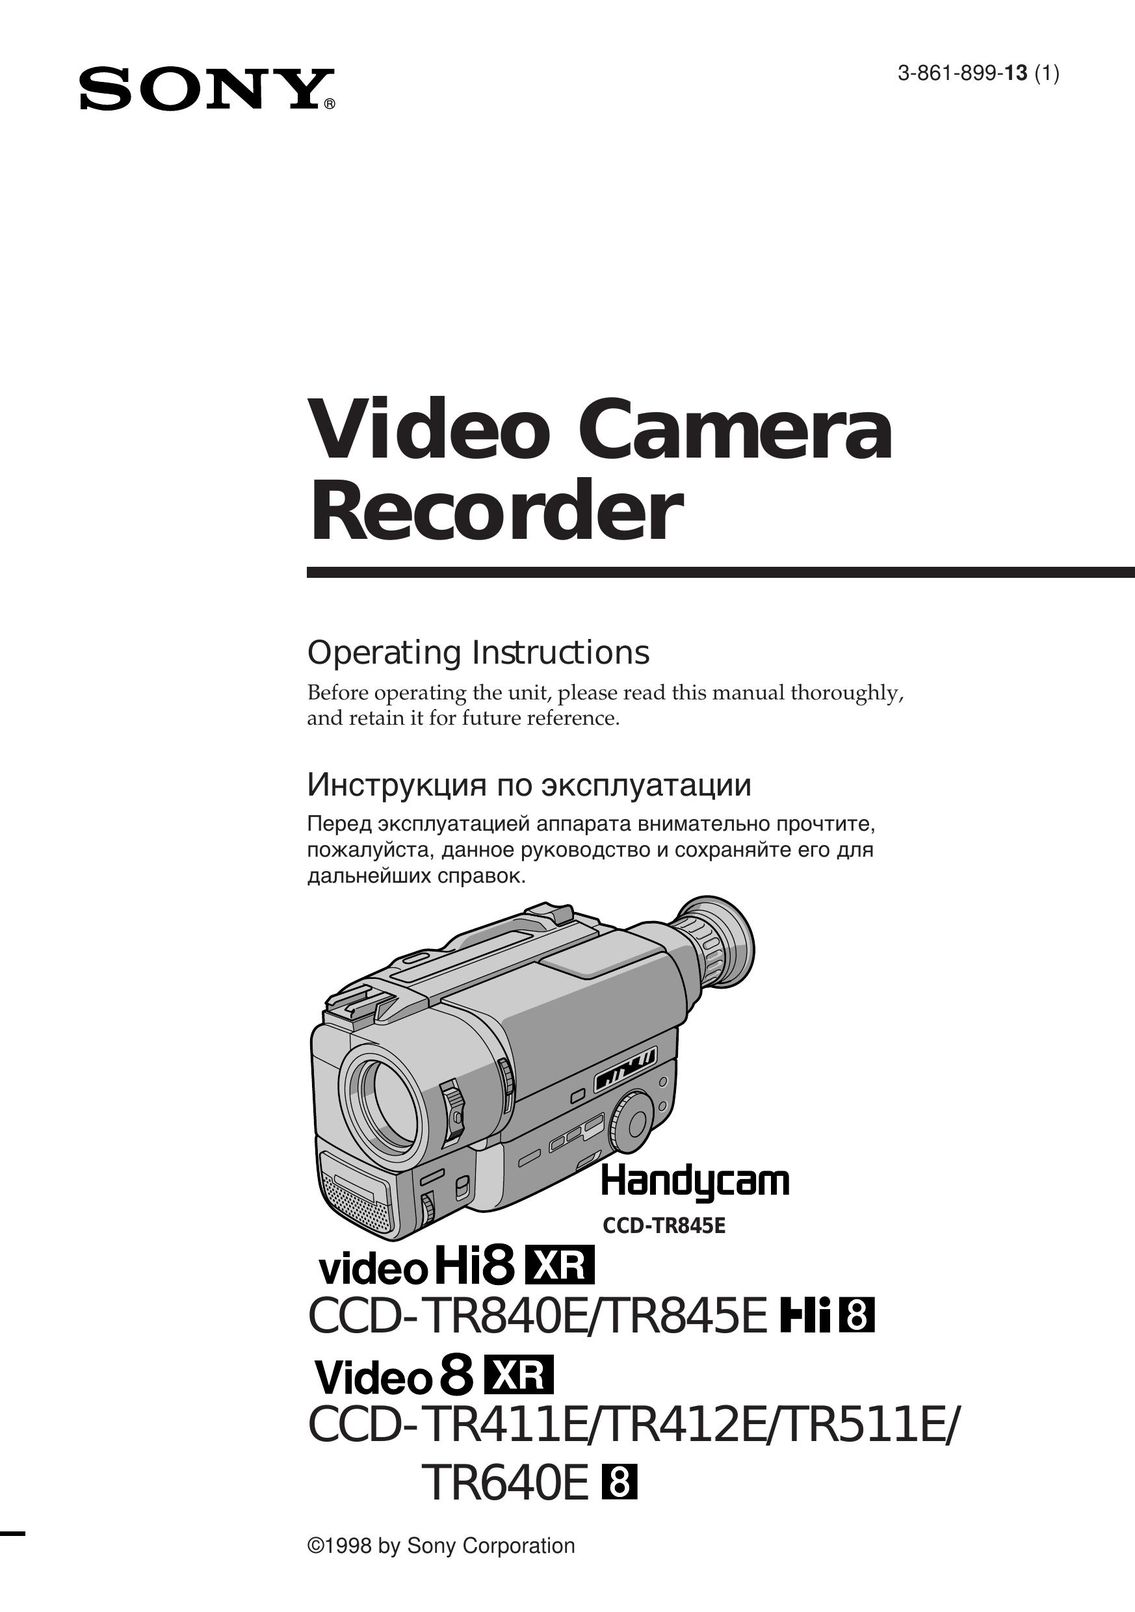 Sony CCD-TR845E VCR User Manual